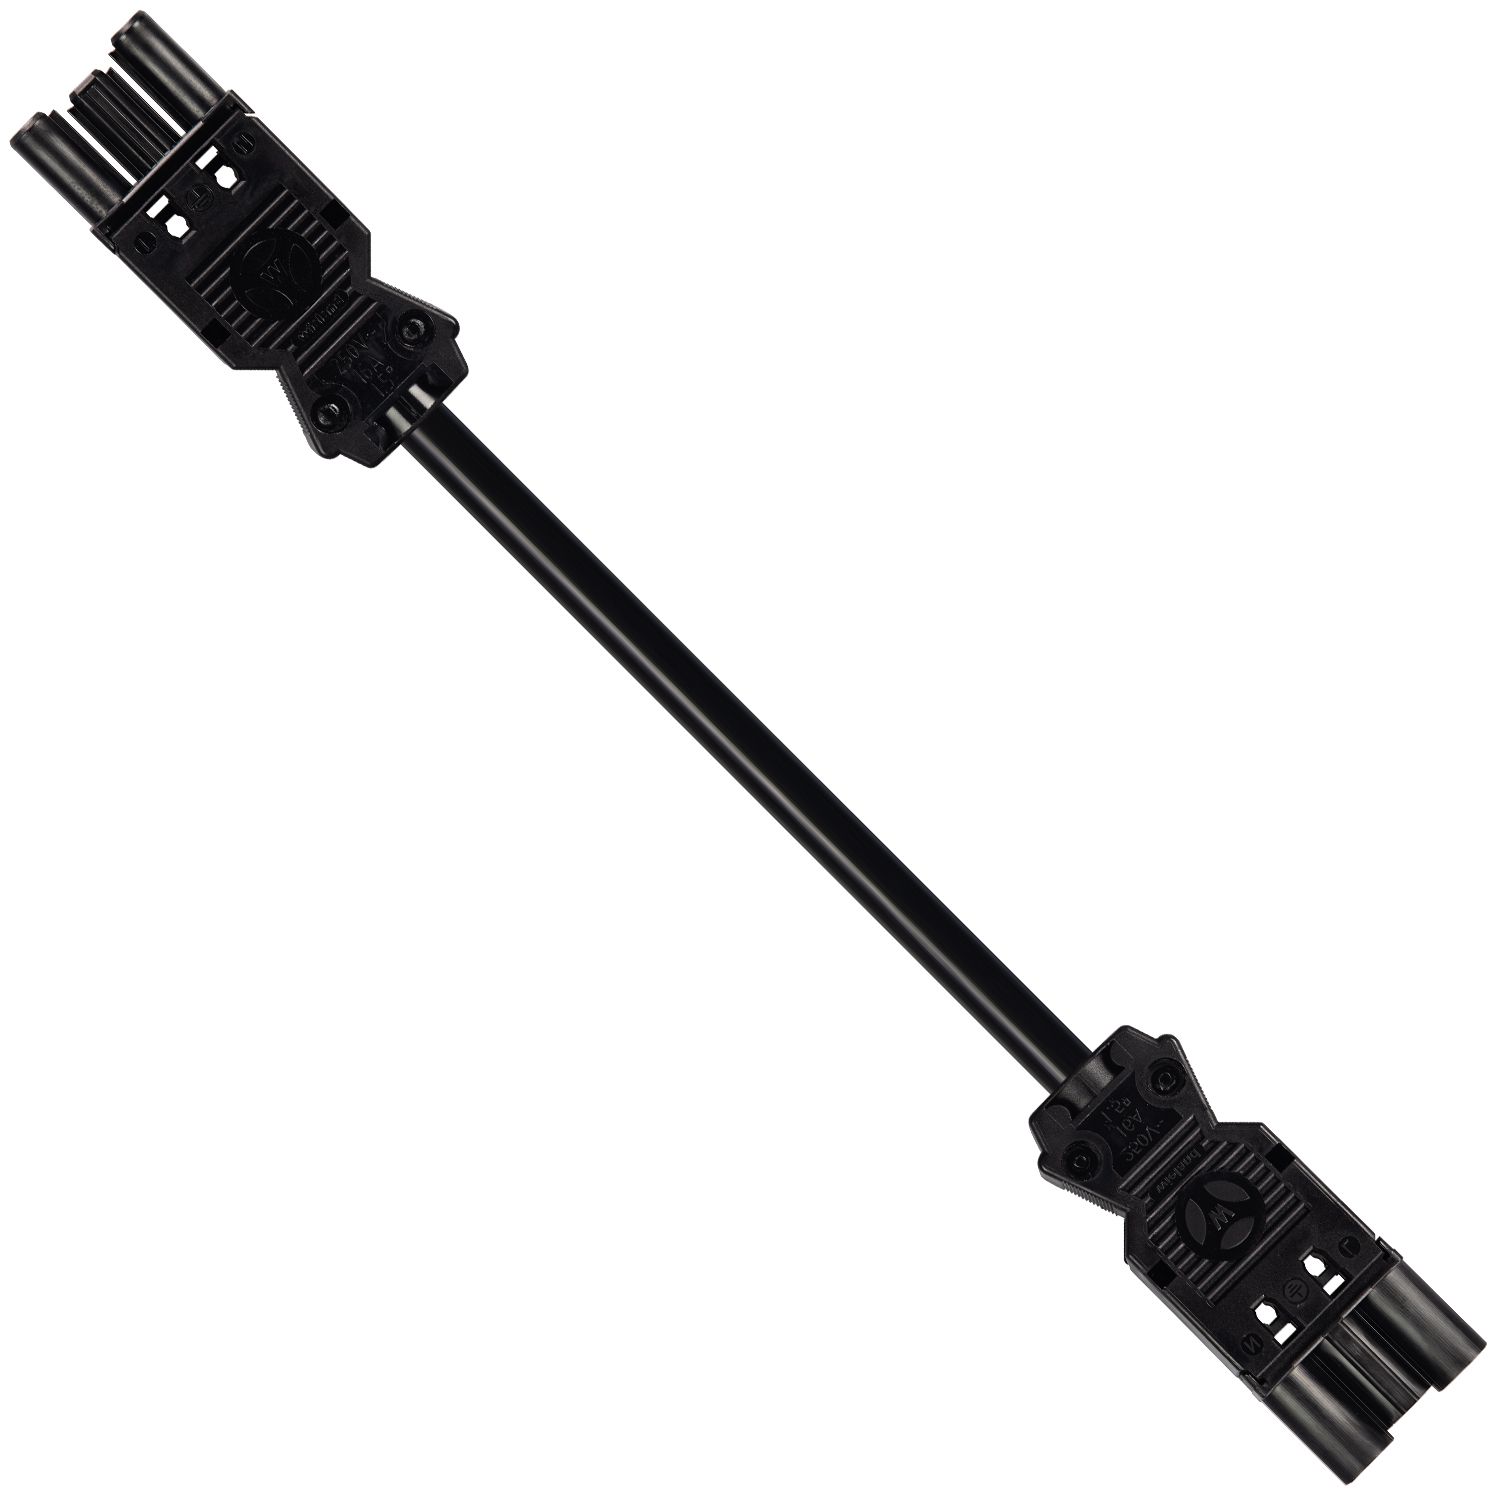 Kindermann extension socket / plug GST18 - 1.0 m cable length